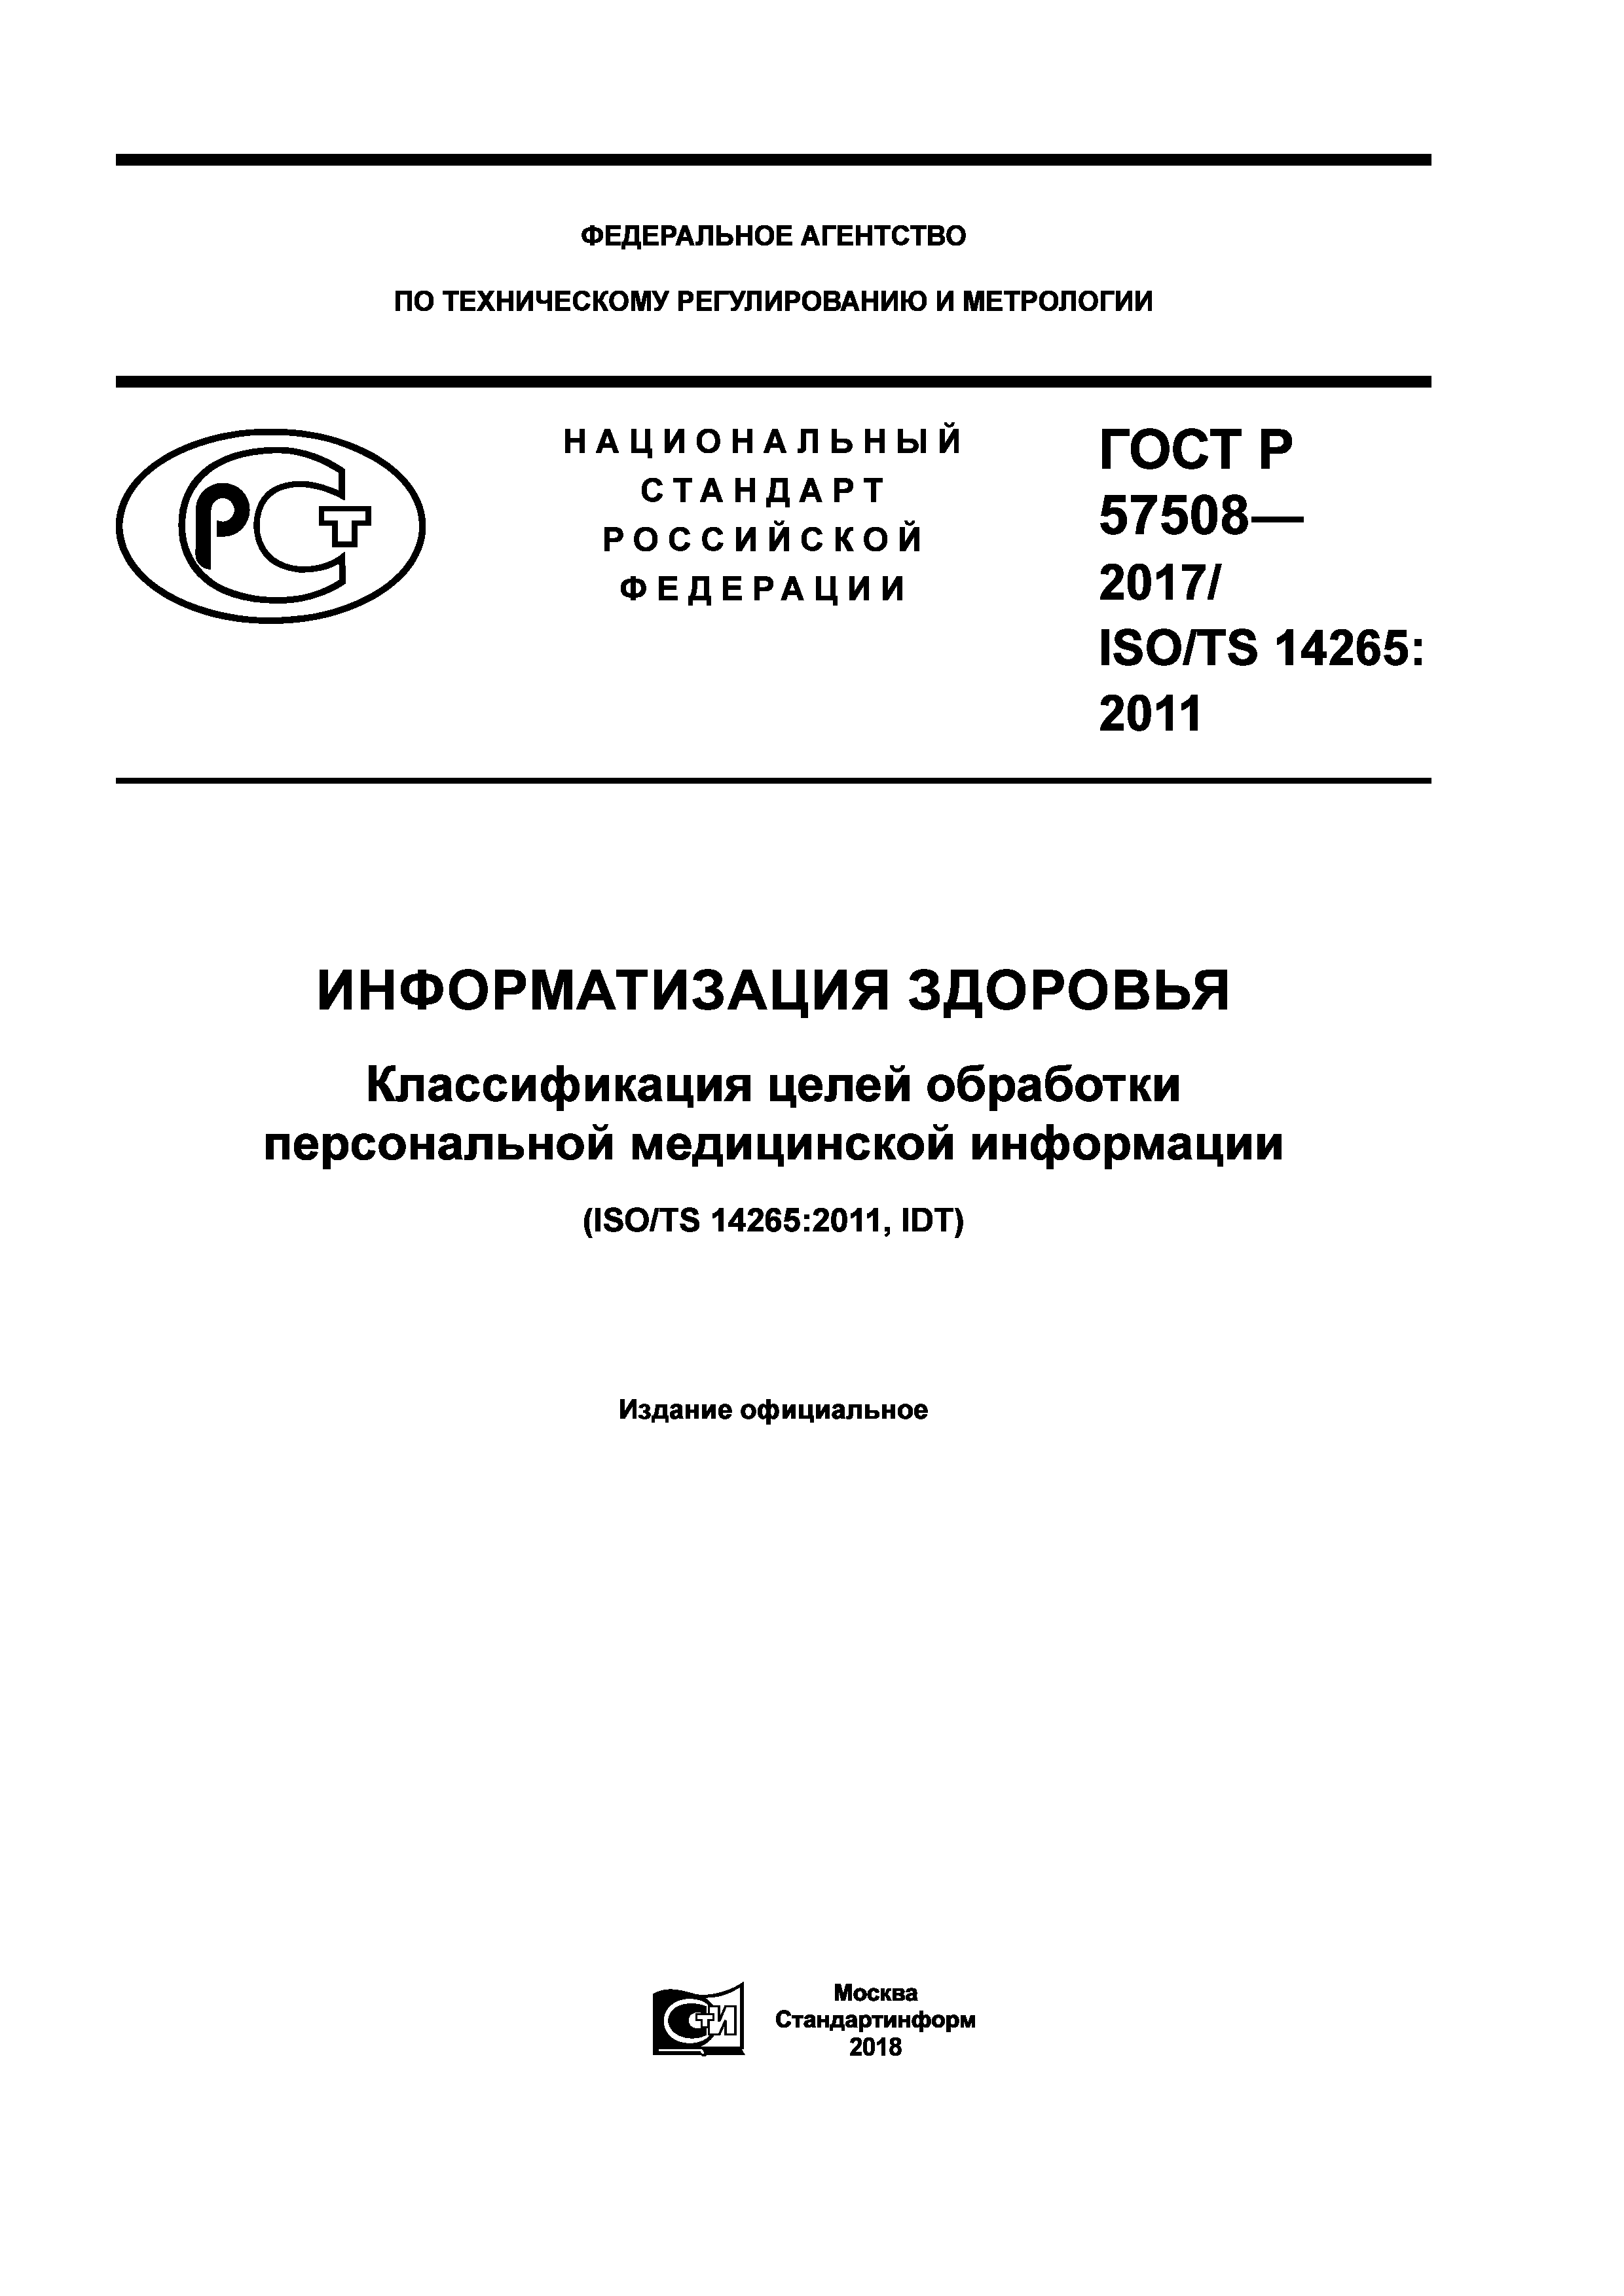 ГОСТ Р 57508-2017